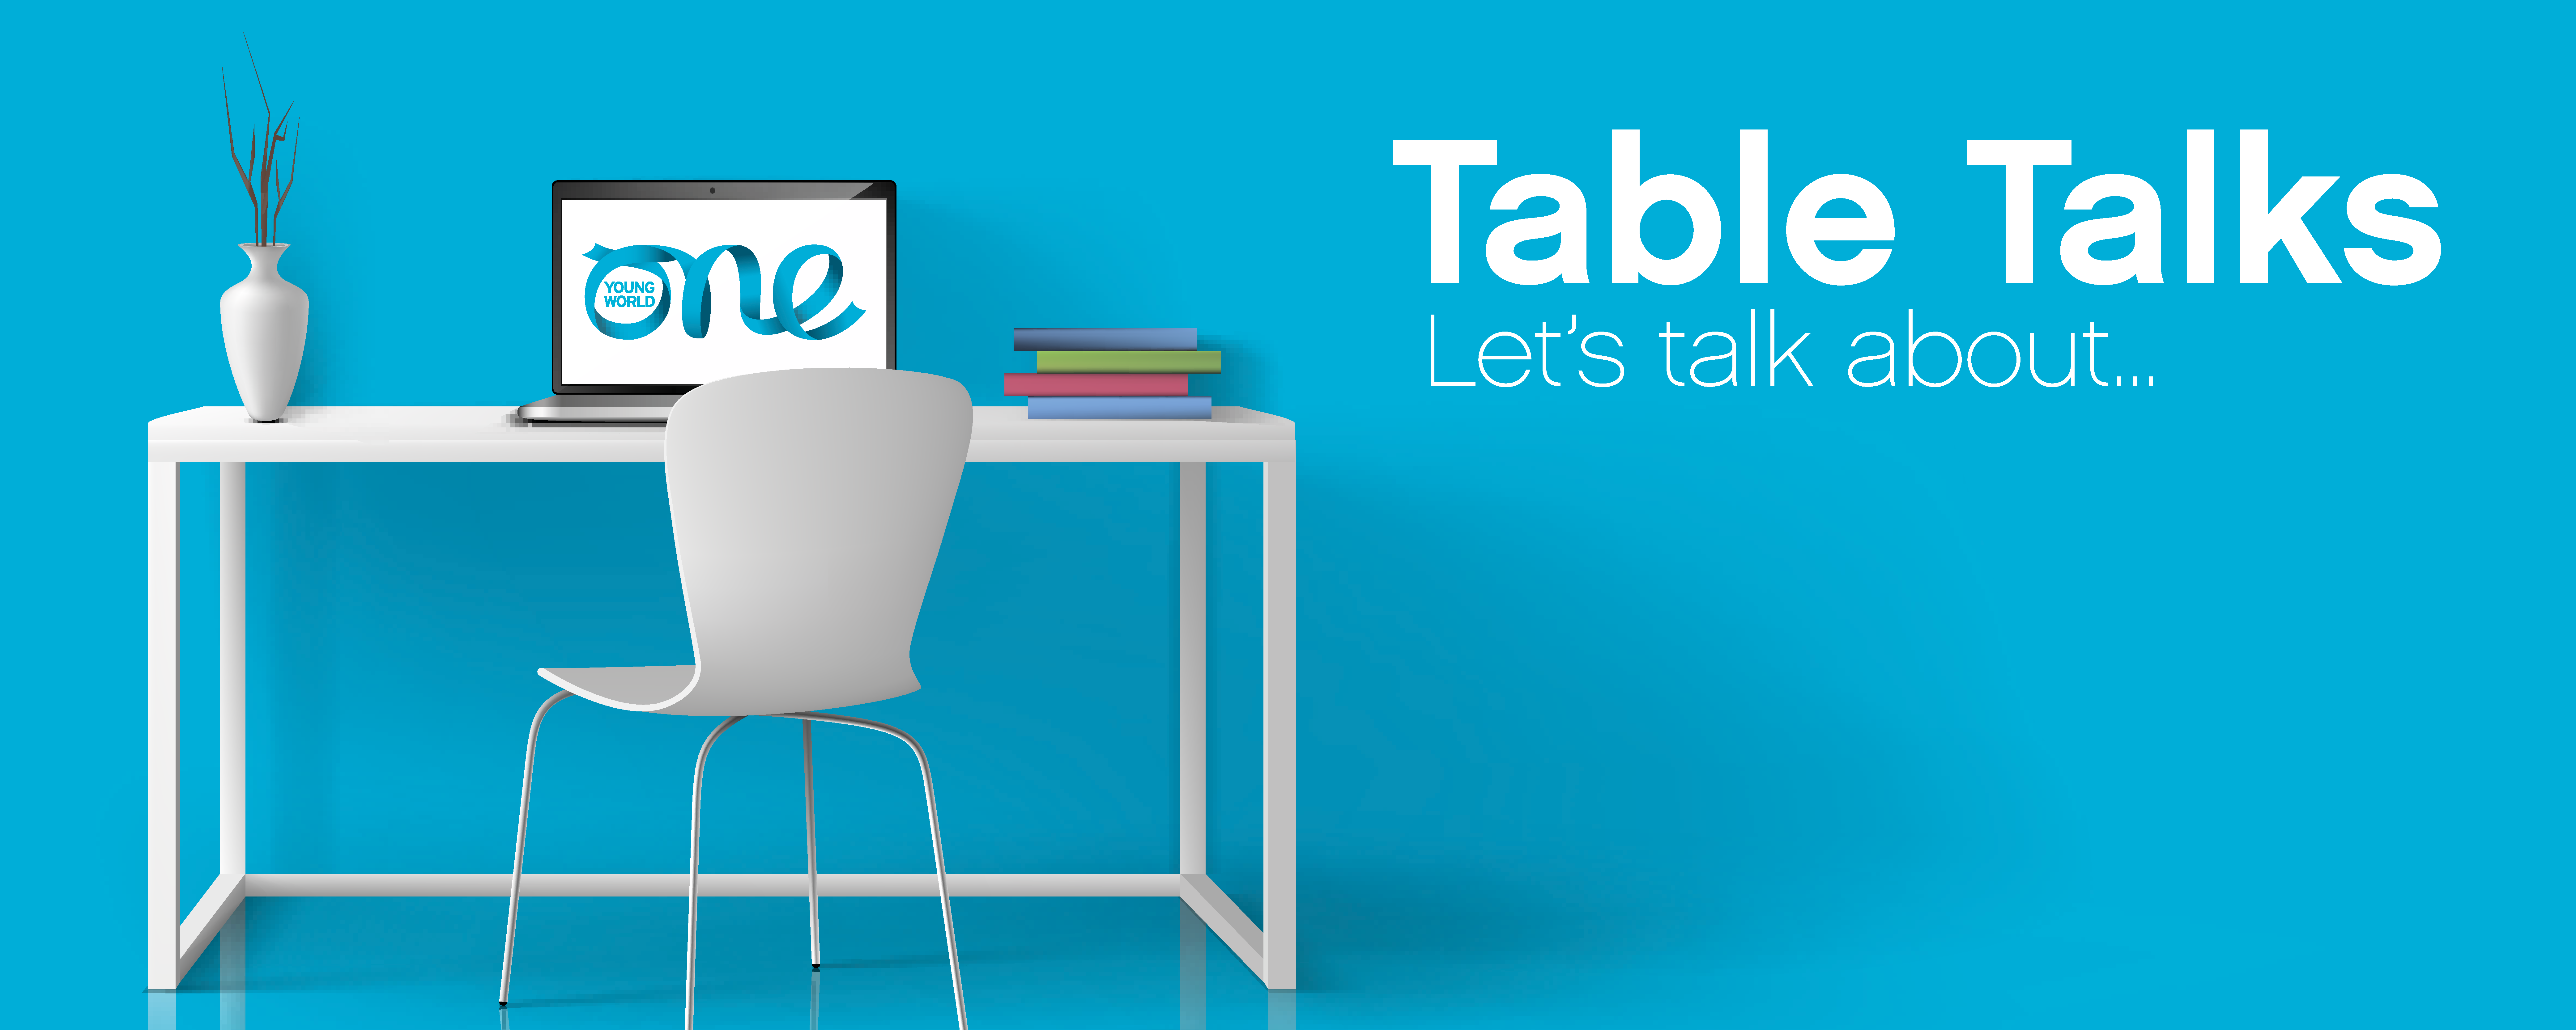 table talk 